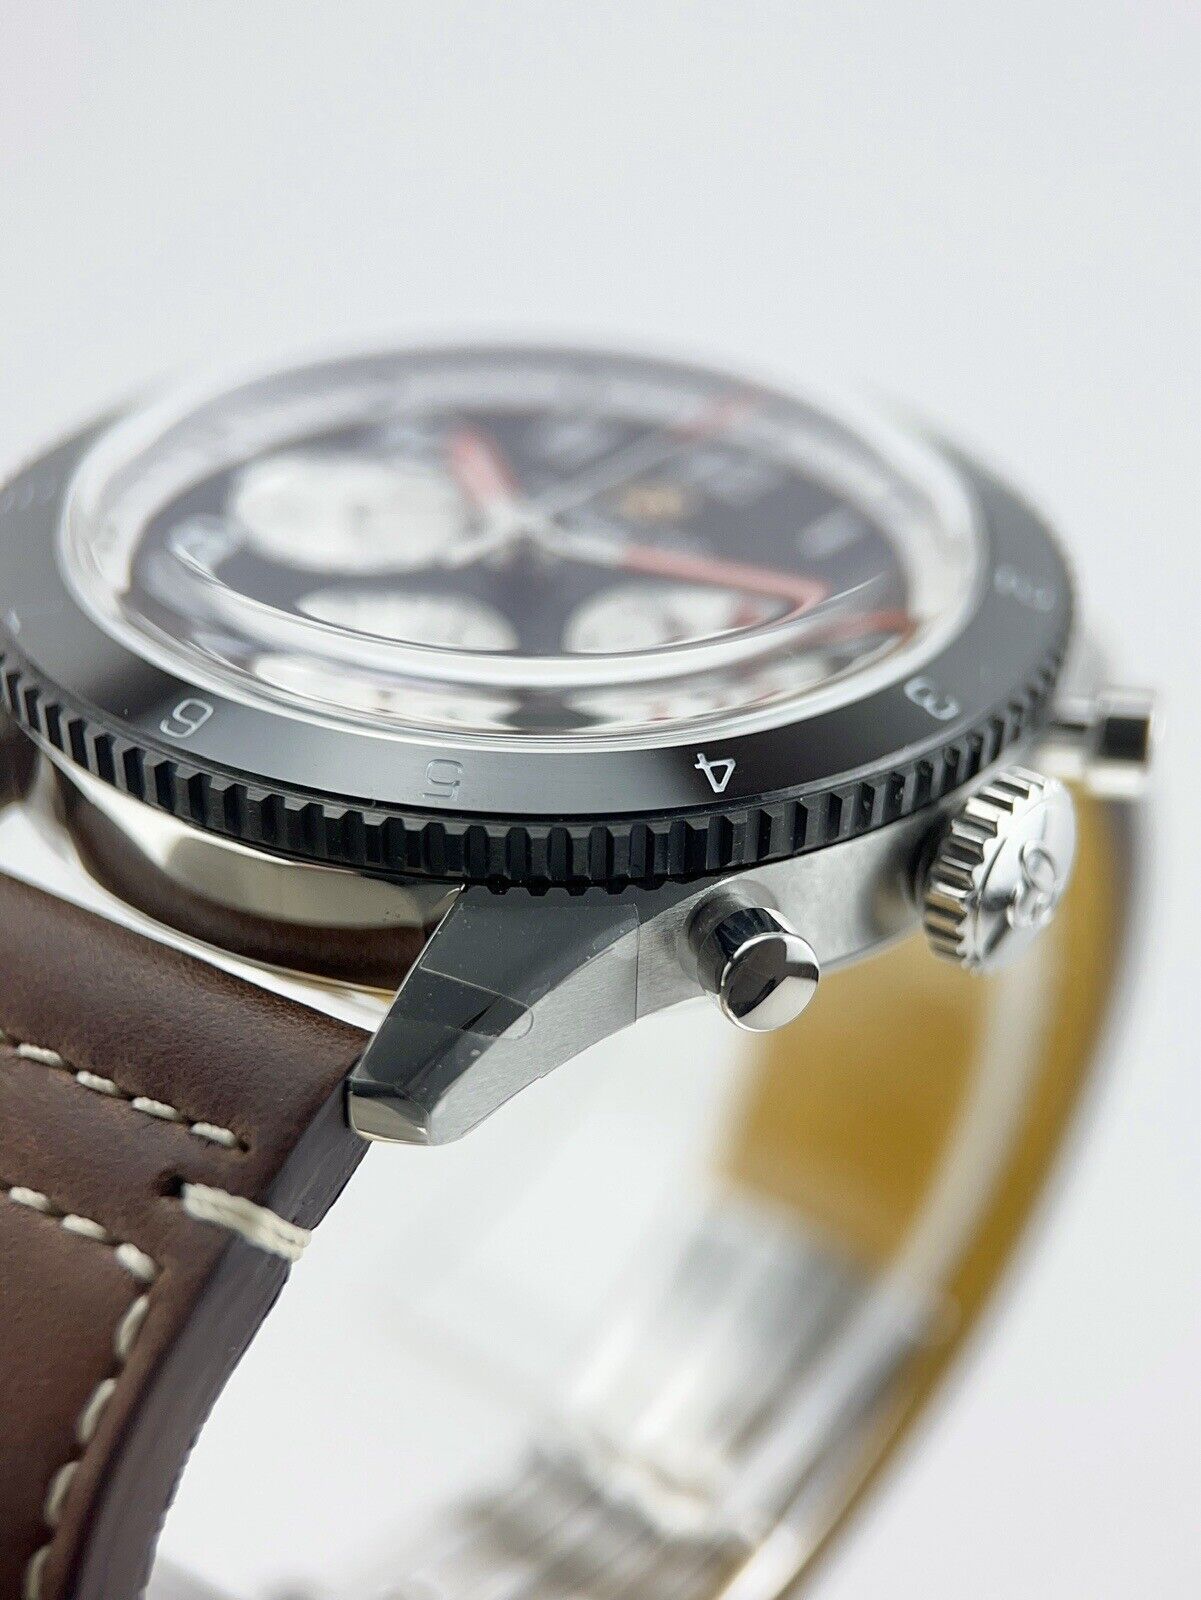 Breitling Classic AVI Steel 42mm Automatic Black Dial Men's Watch Y23380 - B/P